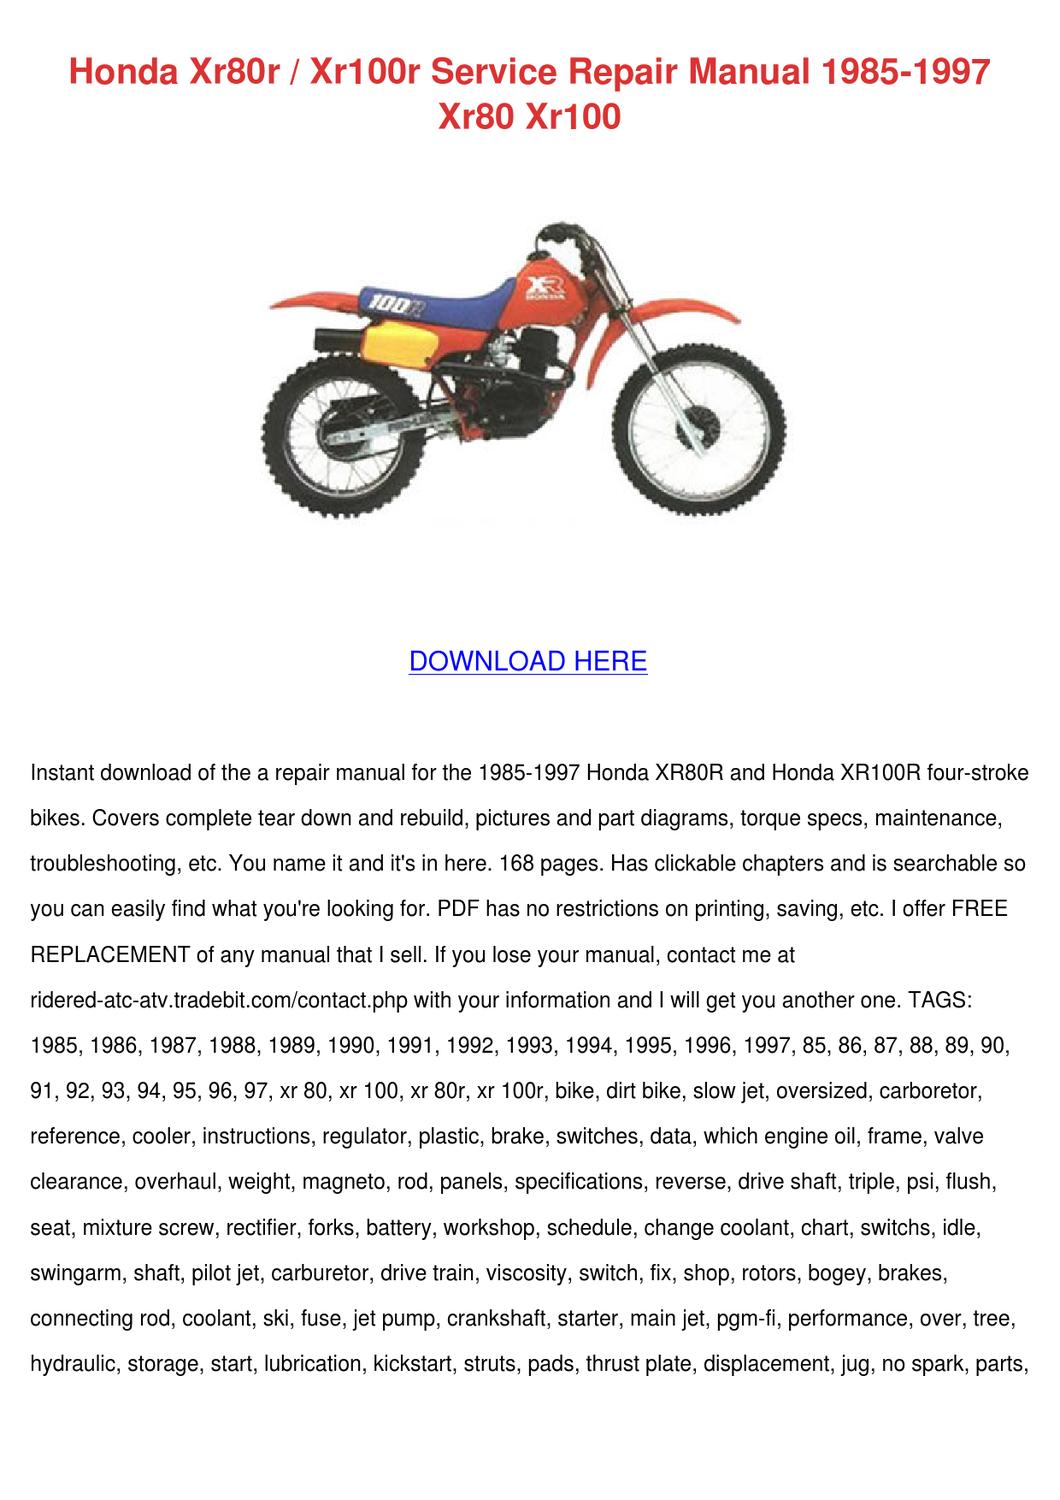 honda odyssey 1997 service manual pdf free